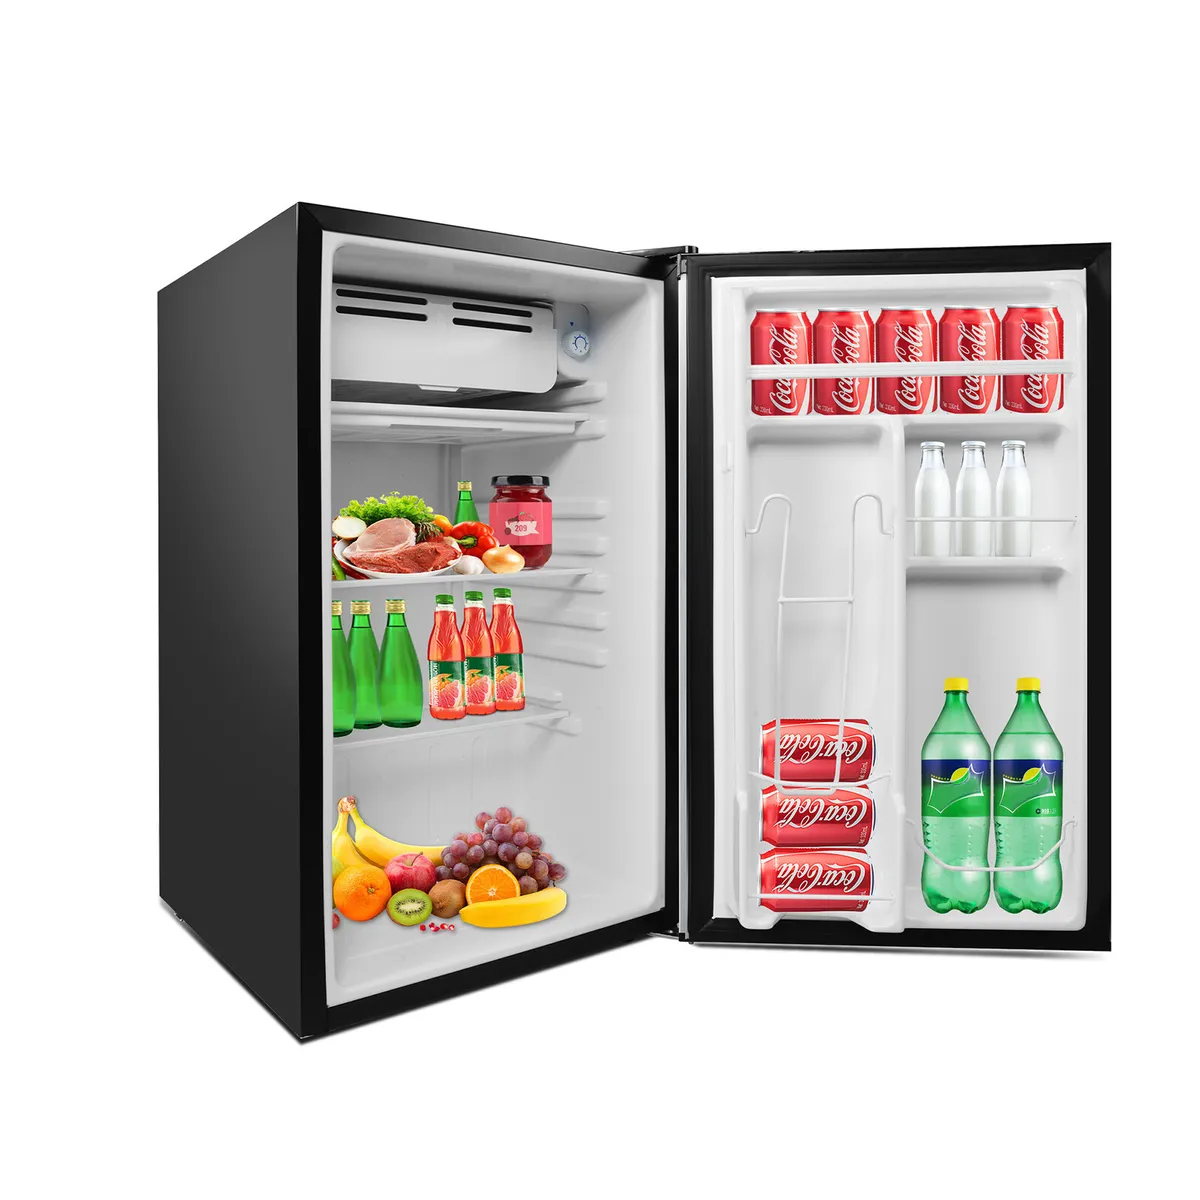 E-Macht 3.2 Cu Mini Fridge Compact Refrigerator With Freezer Stainless Steel